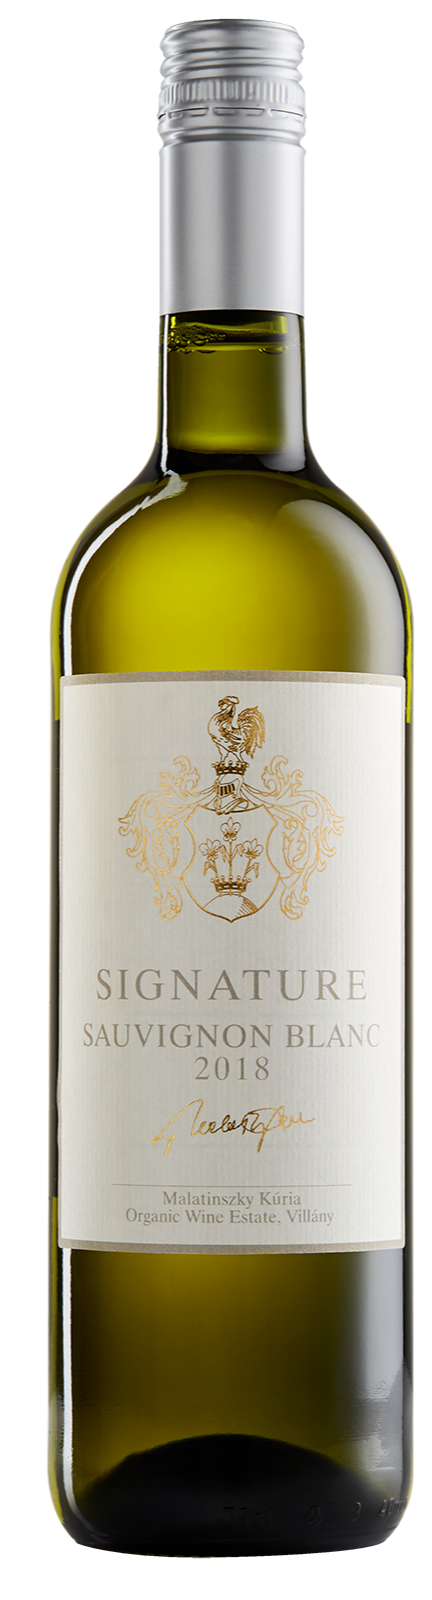 Signature Sauvignon Blanc, Bor - Malatinszky Kúria Organic Wine Estate